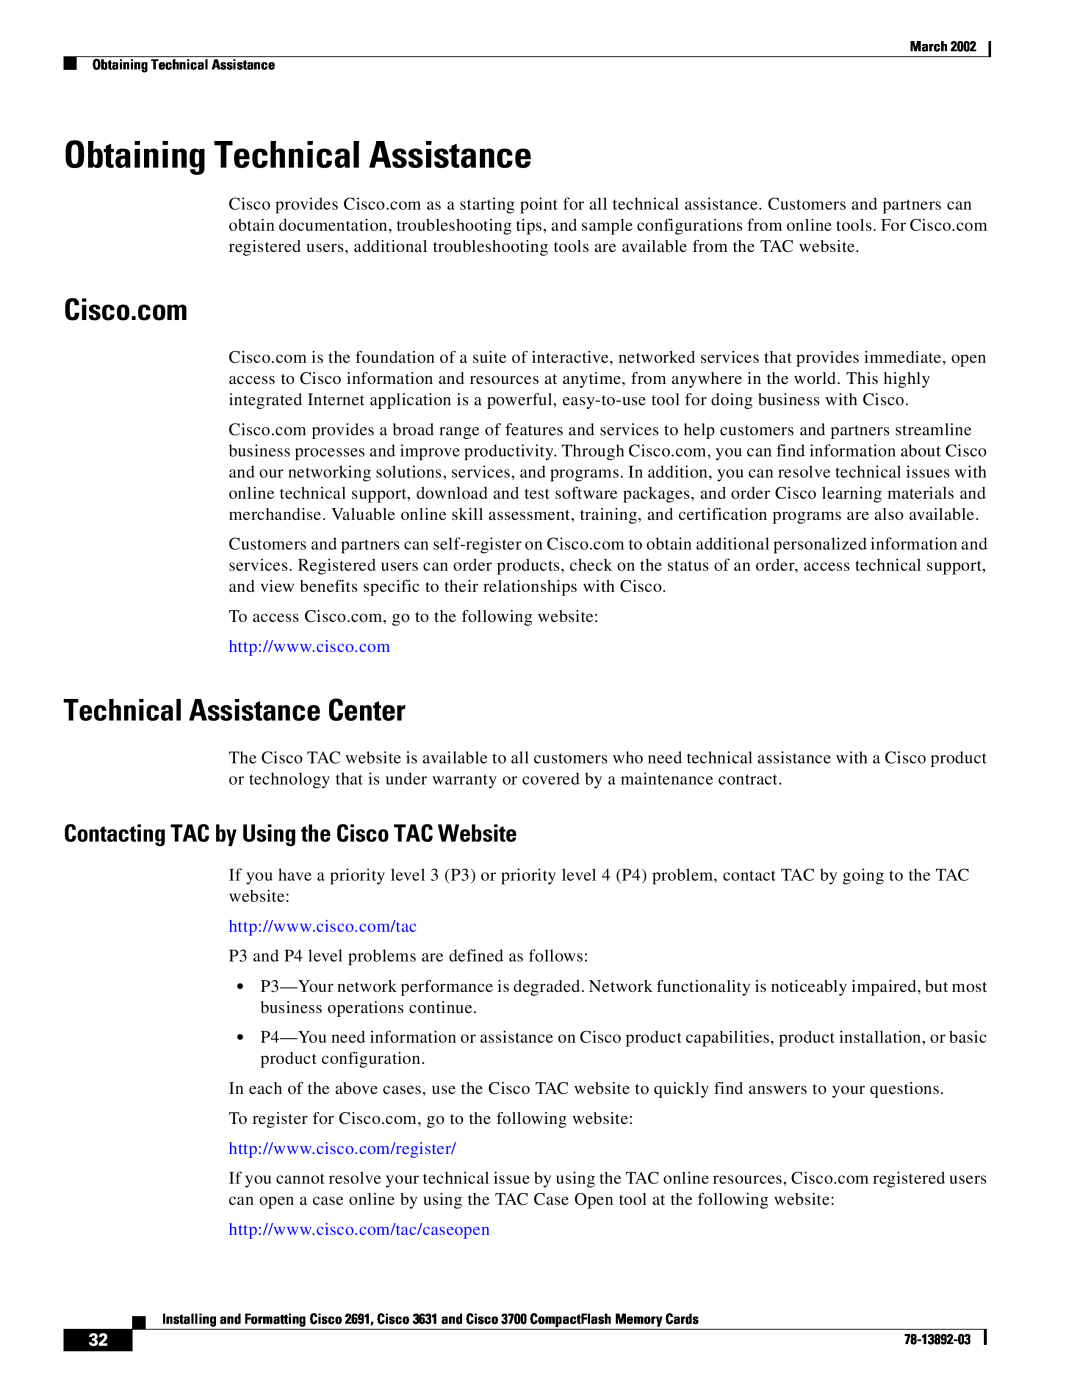 Cisco Systems 3631, 2691 manual Obtaining Technical Assistance, Cisco.com, Technical Assistance Center 